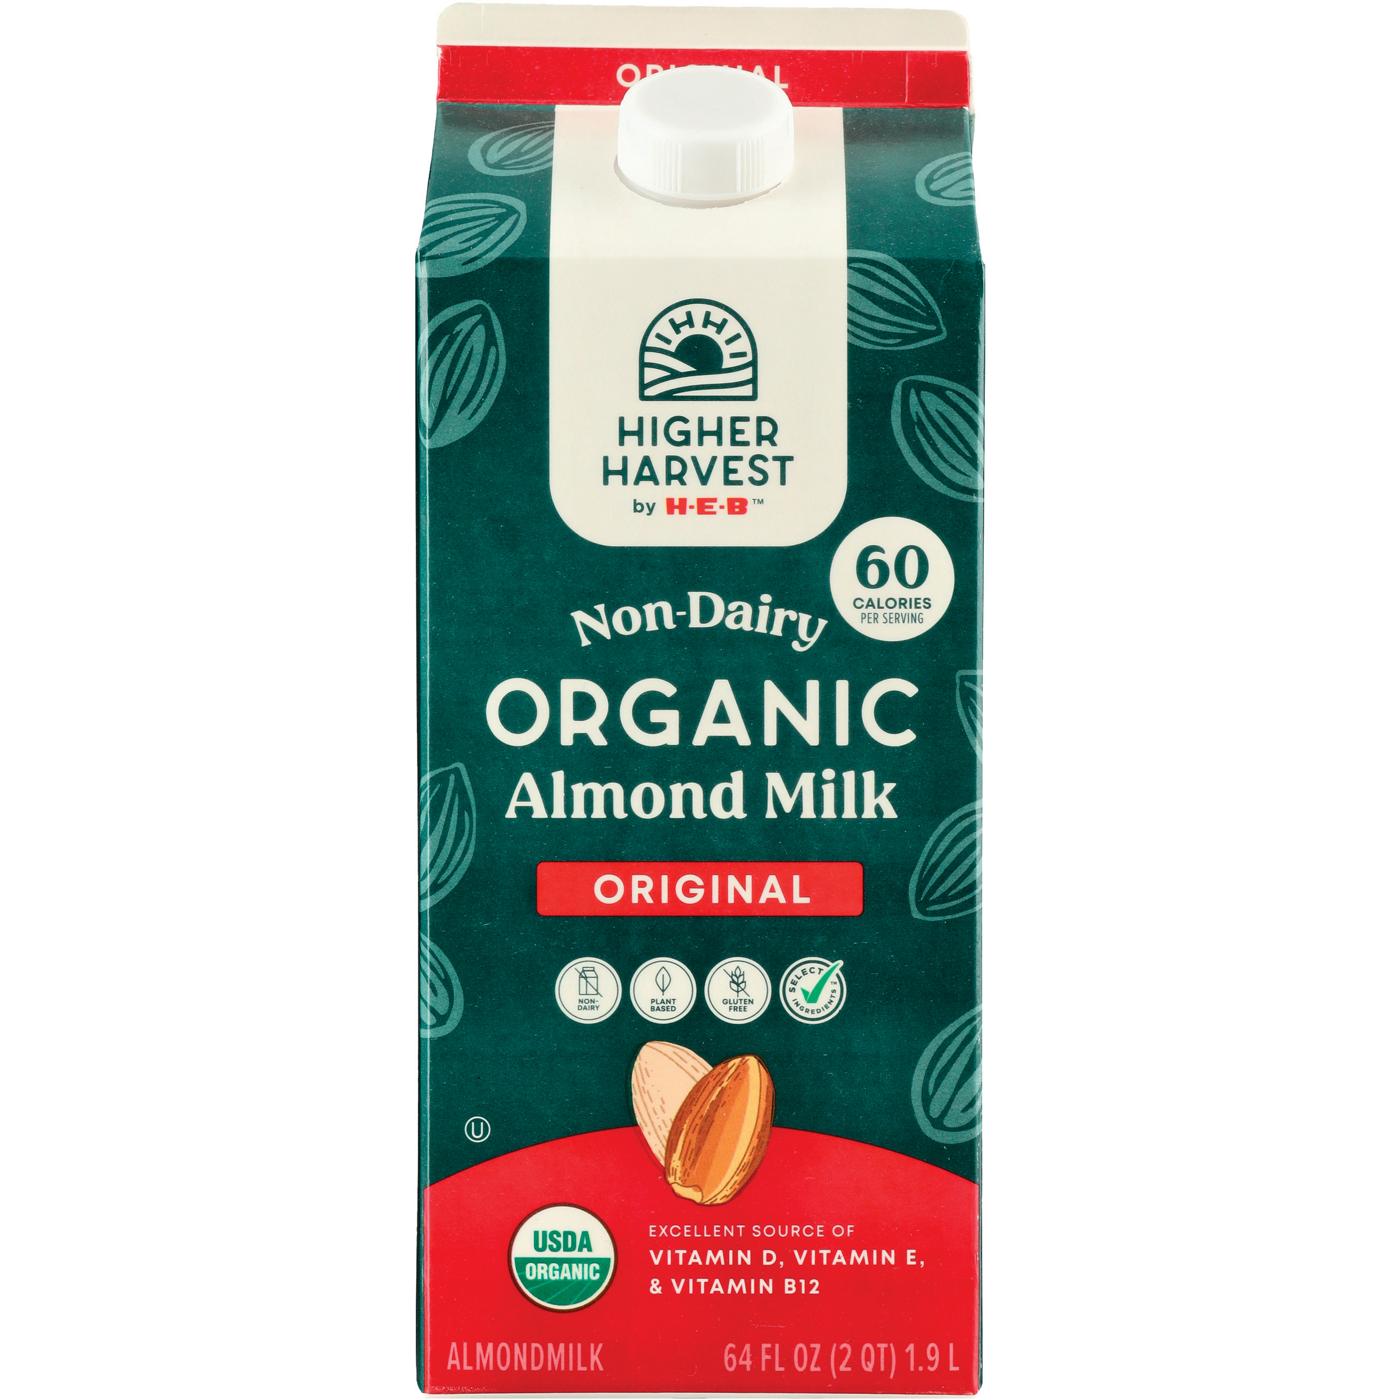 Higher Harvest by H-E-B Organic Non-Dairy Almond Milk – Original; image 1 of 2